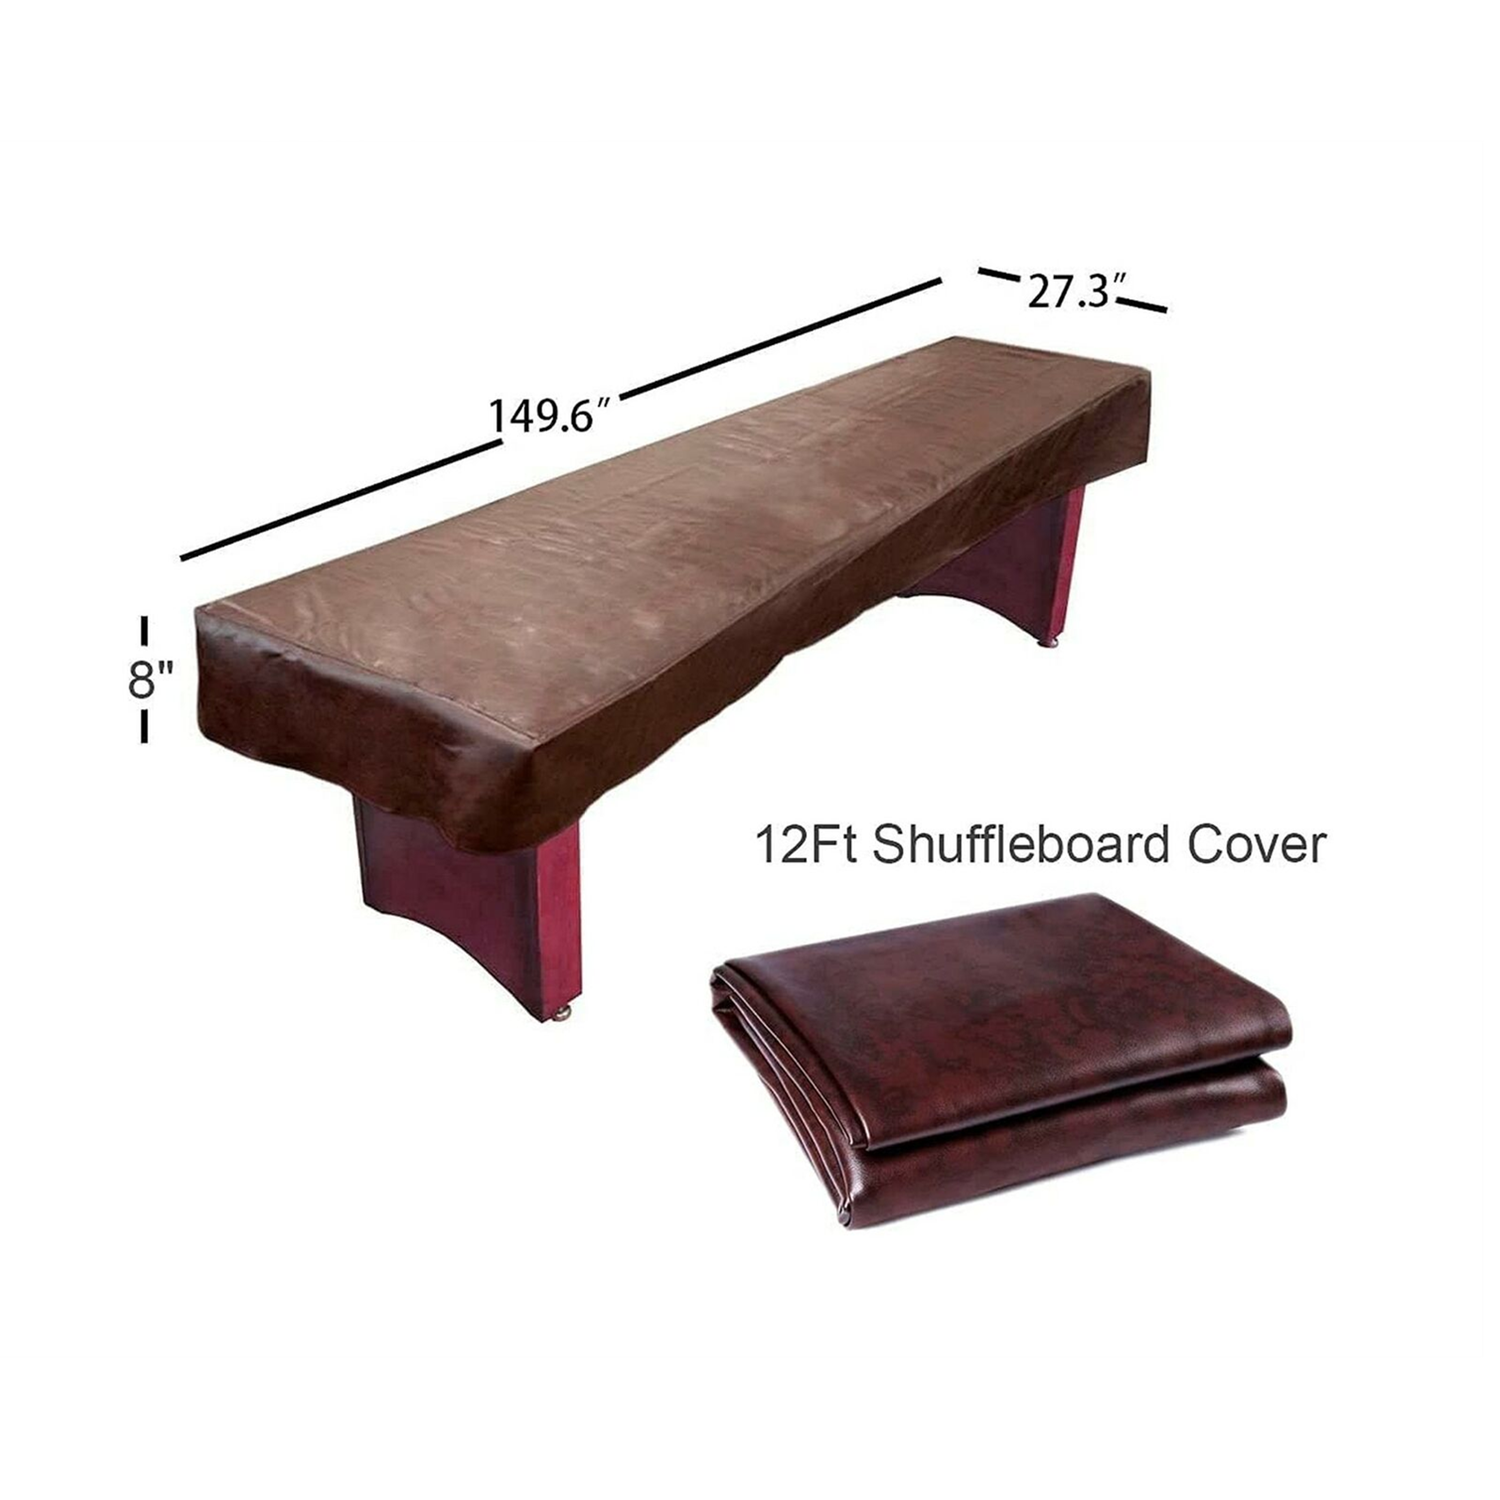 12FT Shuffleboard Table Cover-Heavy Duty